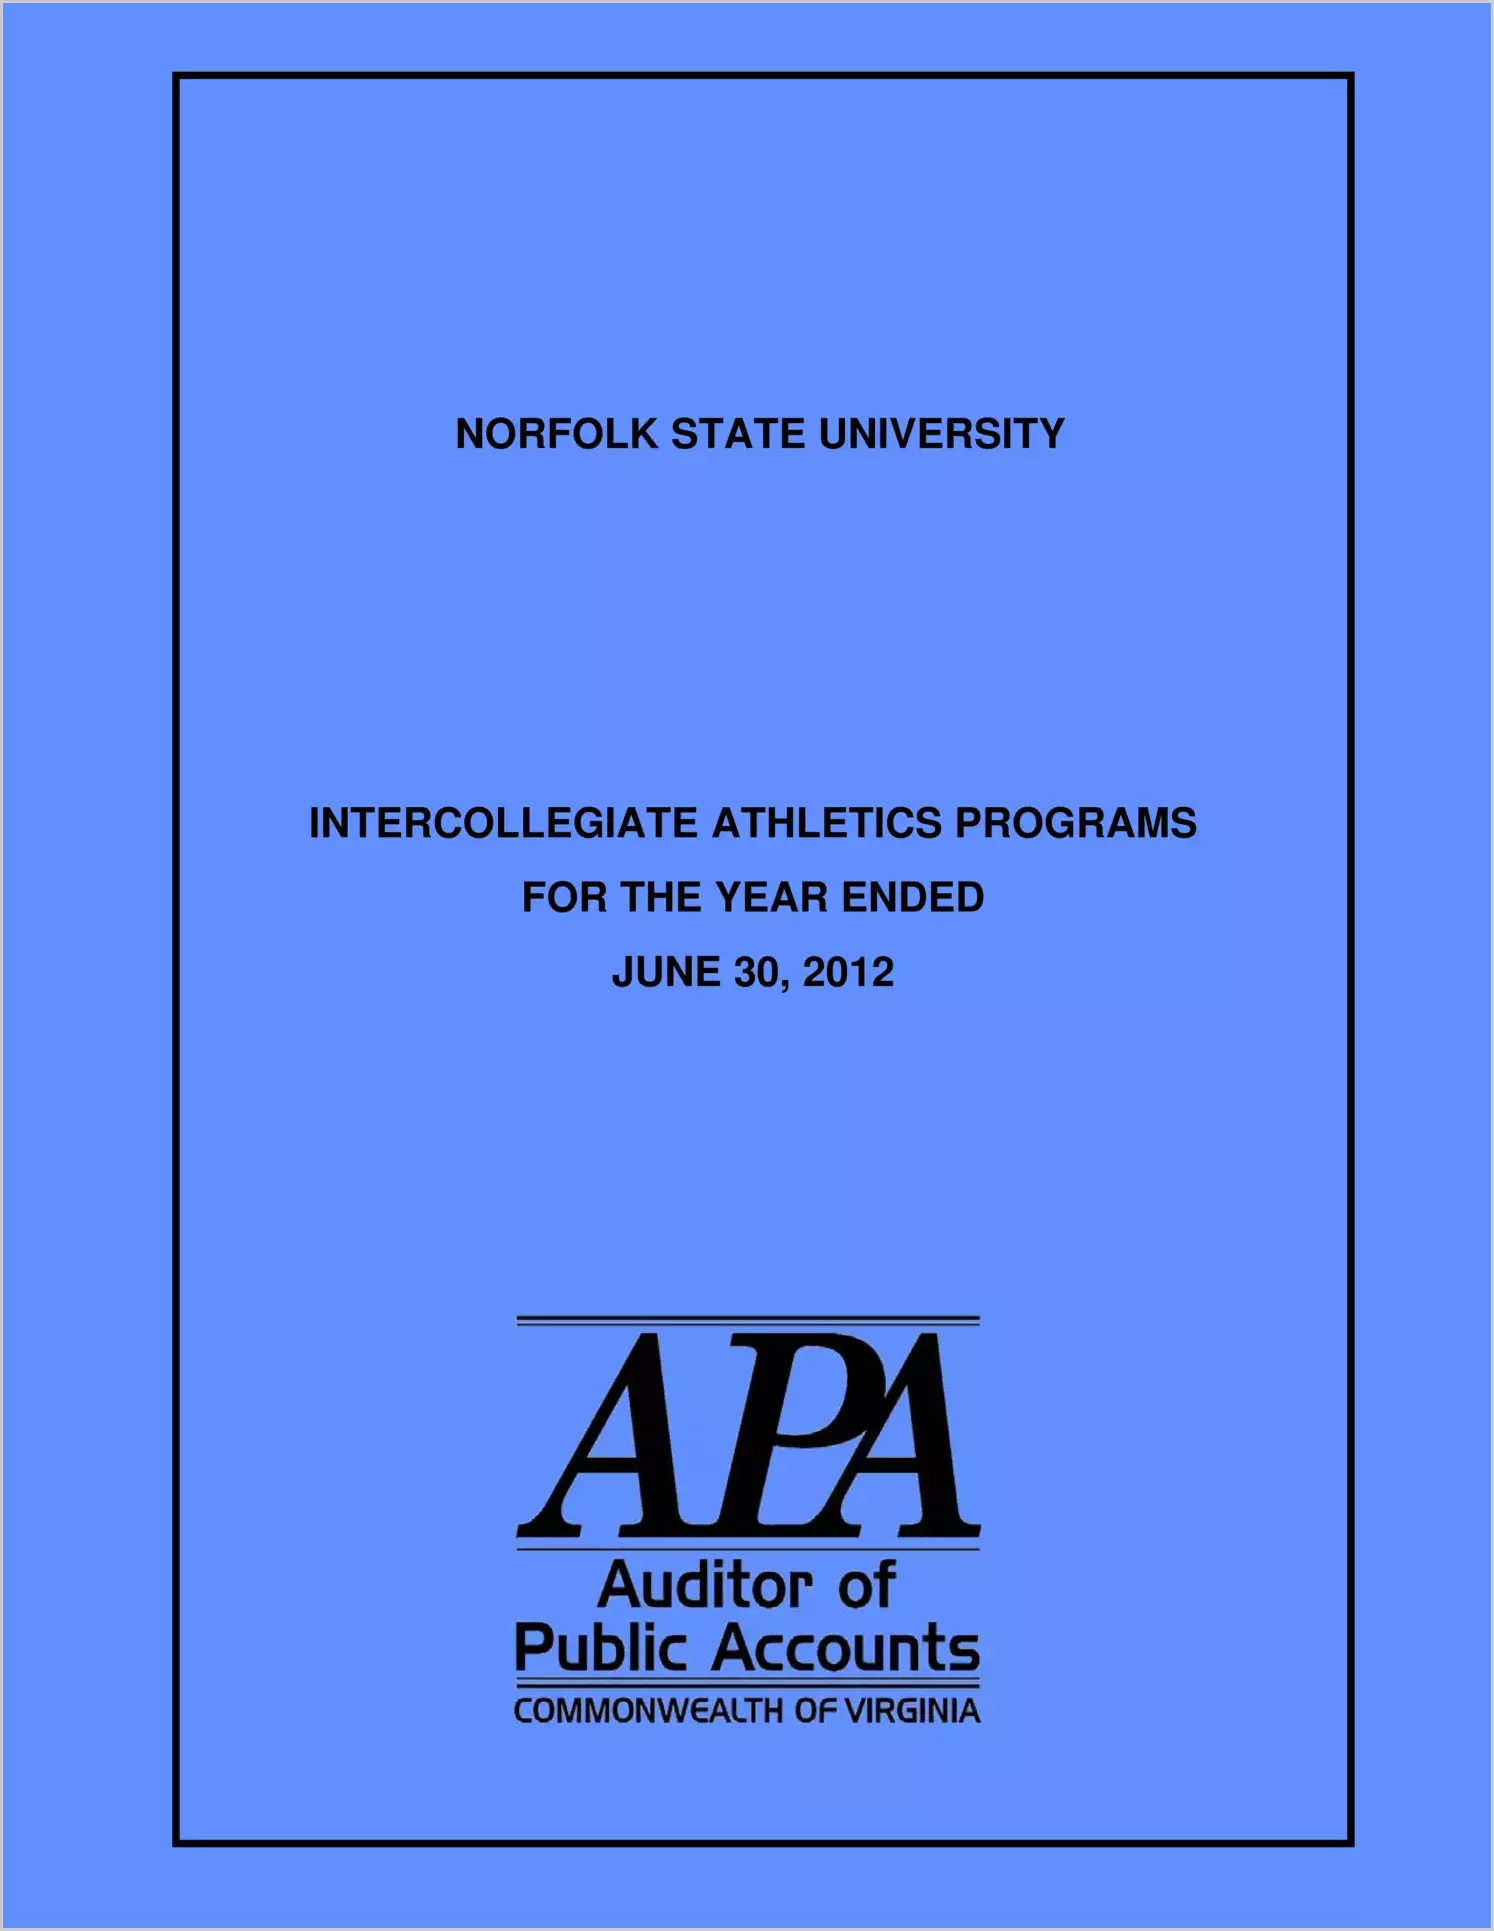 Norfolk State University Intercollegiate Athletics Programs for the year ended June 30, 2012